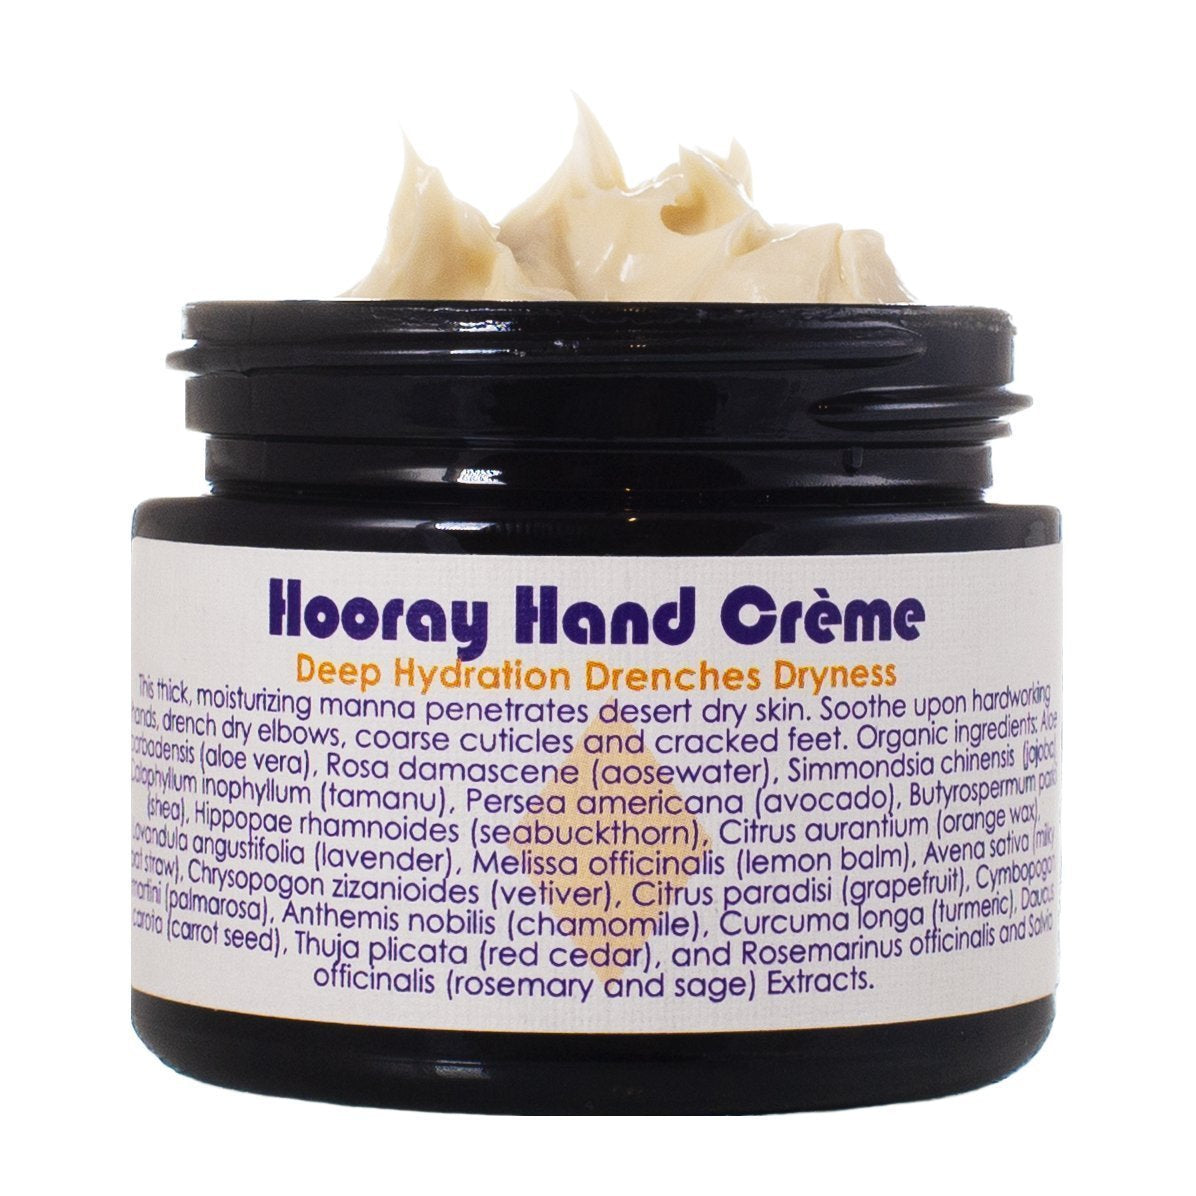 Hooray Hand Crème